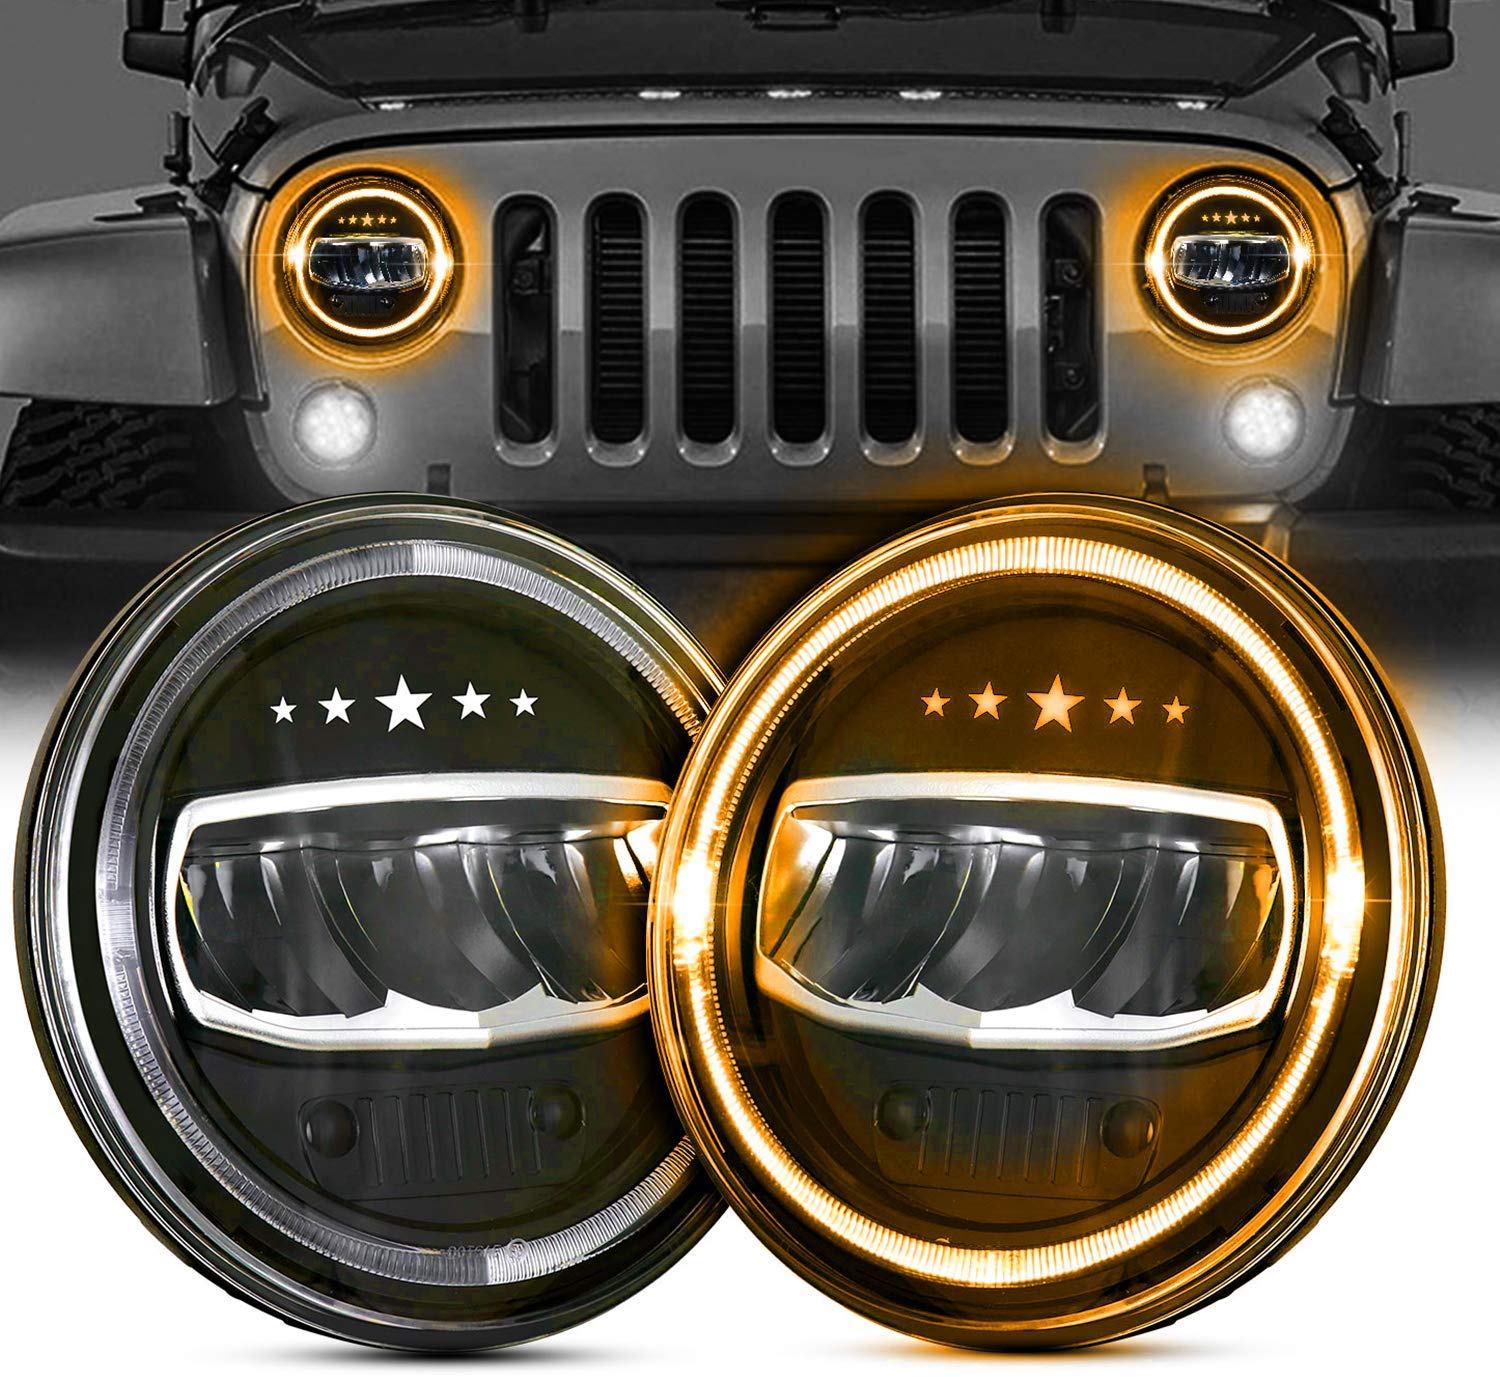 Details about   Bright 8000K H13 LED Headlight Lamp Bulbs Kit Hi/Lo for Jeep Wrangler JK 07-19